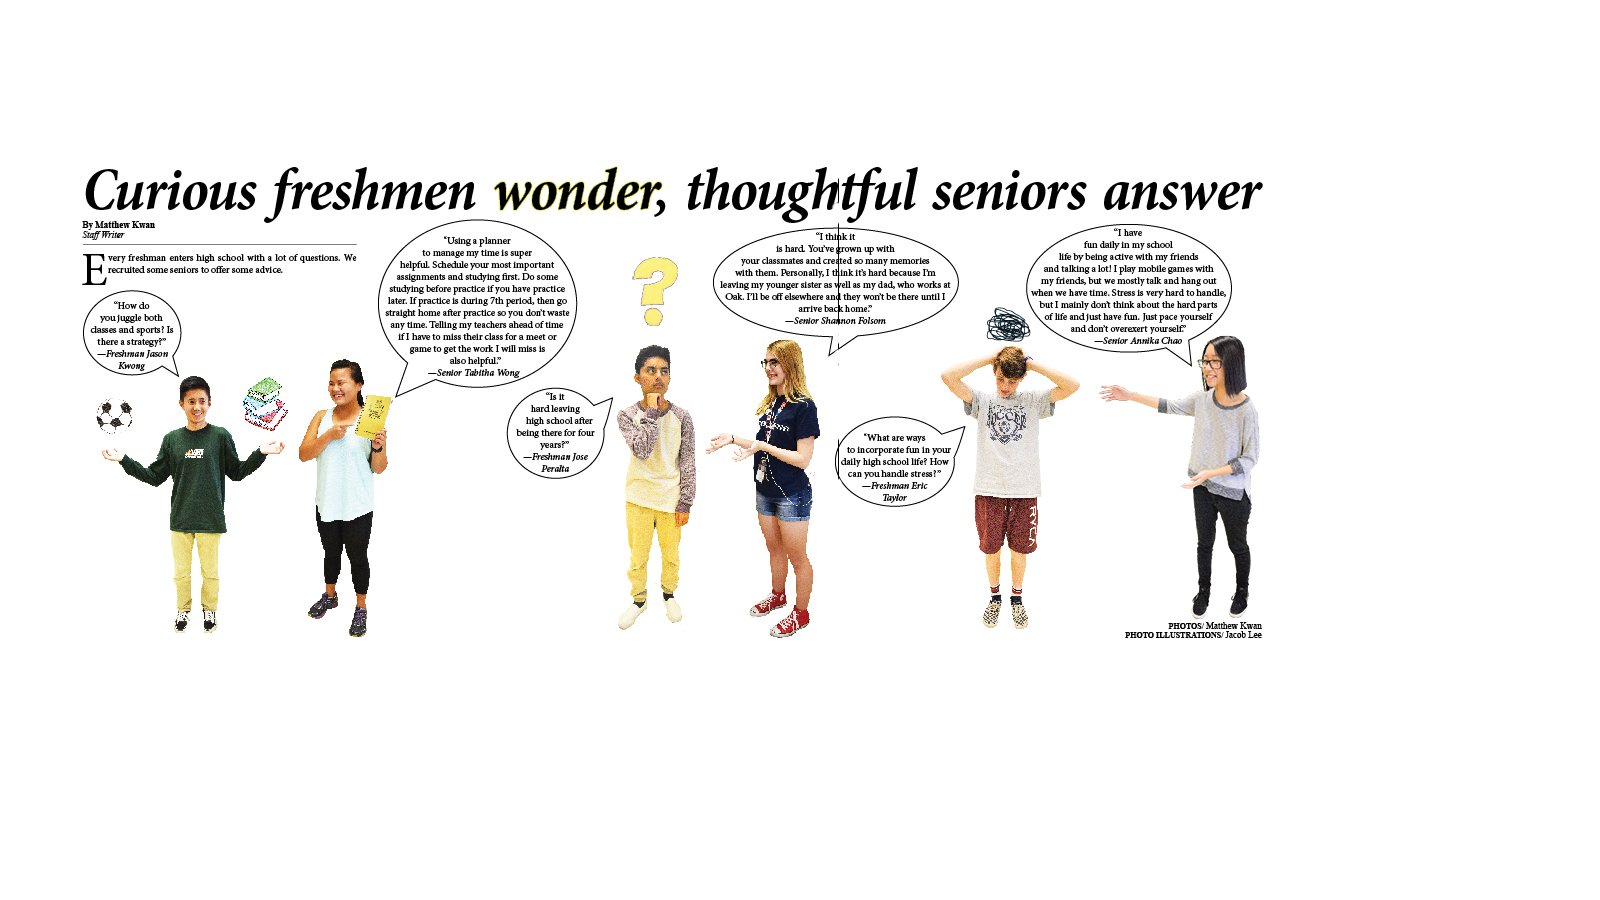 Curious freshmen wonder, thoughtful seniors answer